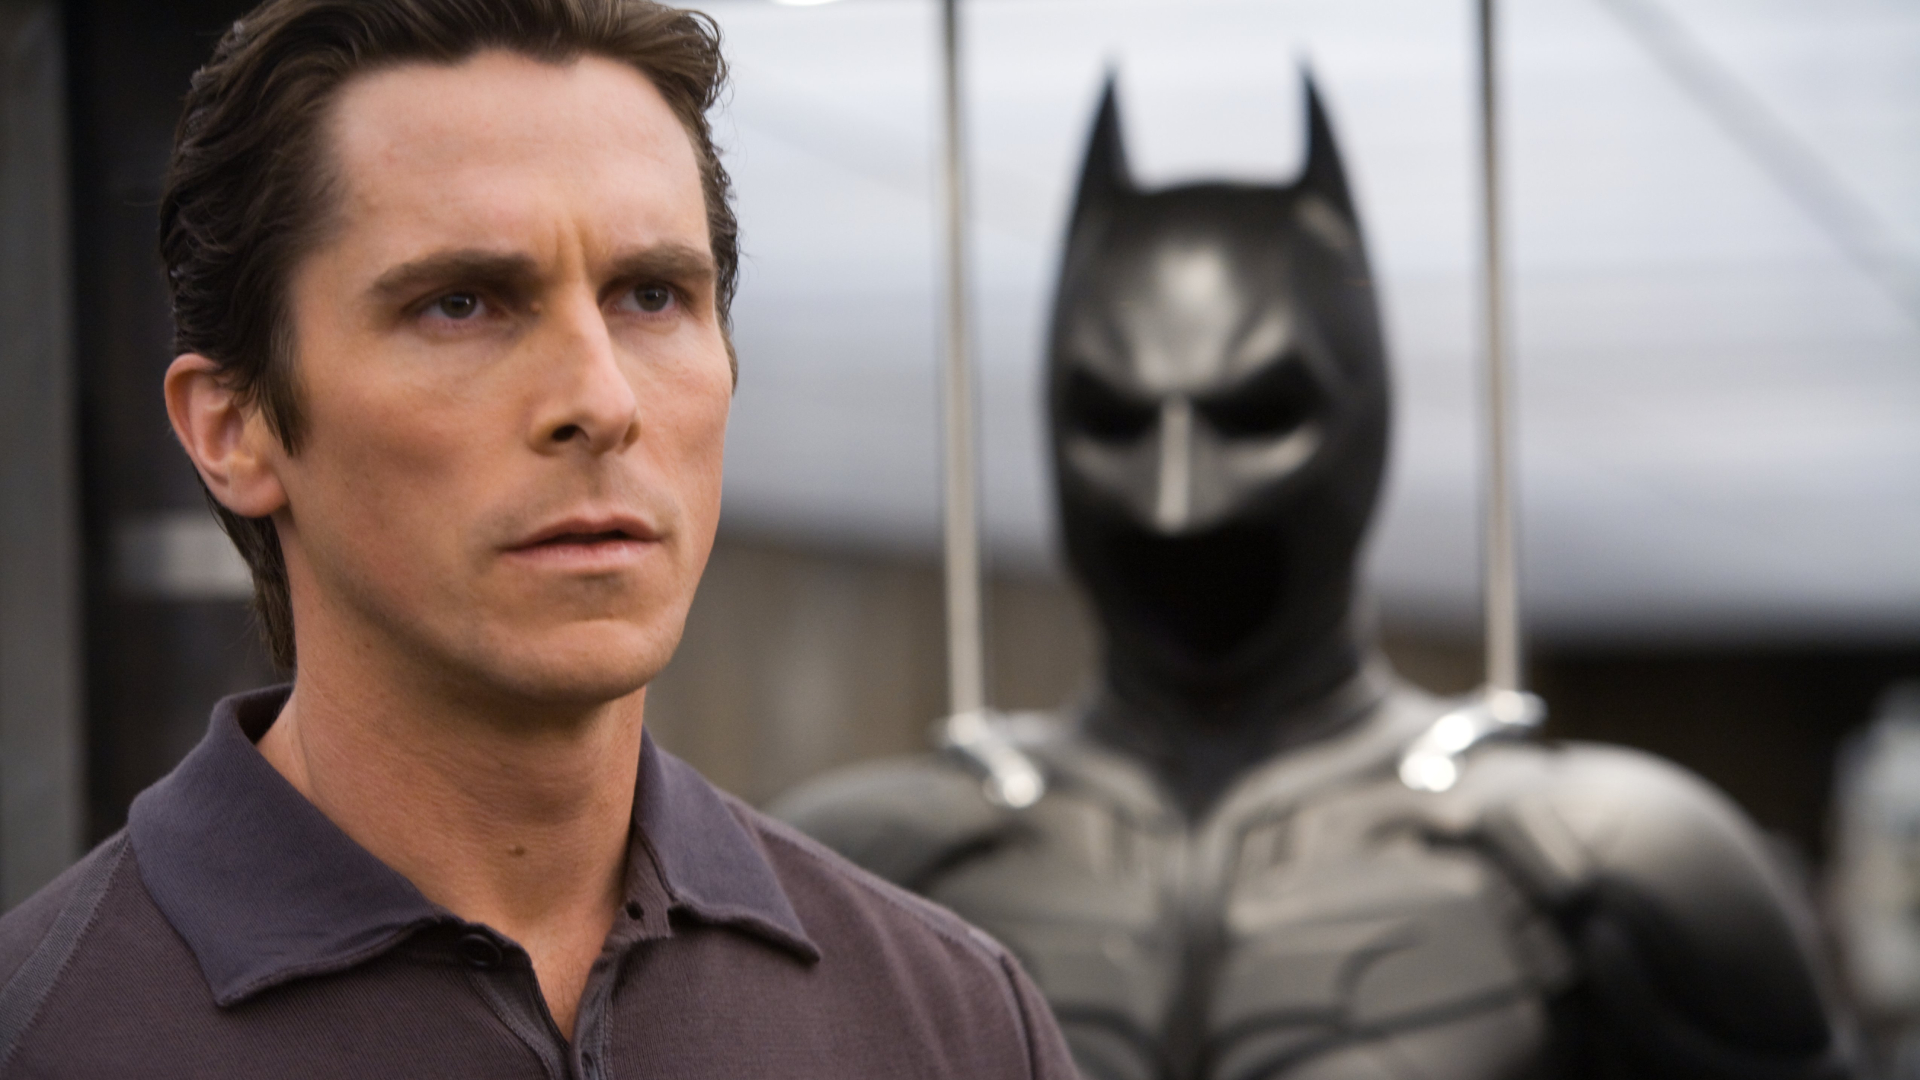 The Dark Knight at 10: how Christopher Nolan reshaped superhero cinema, The Dark Knight